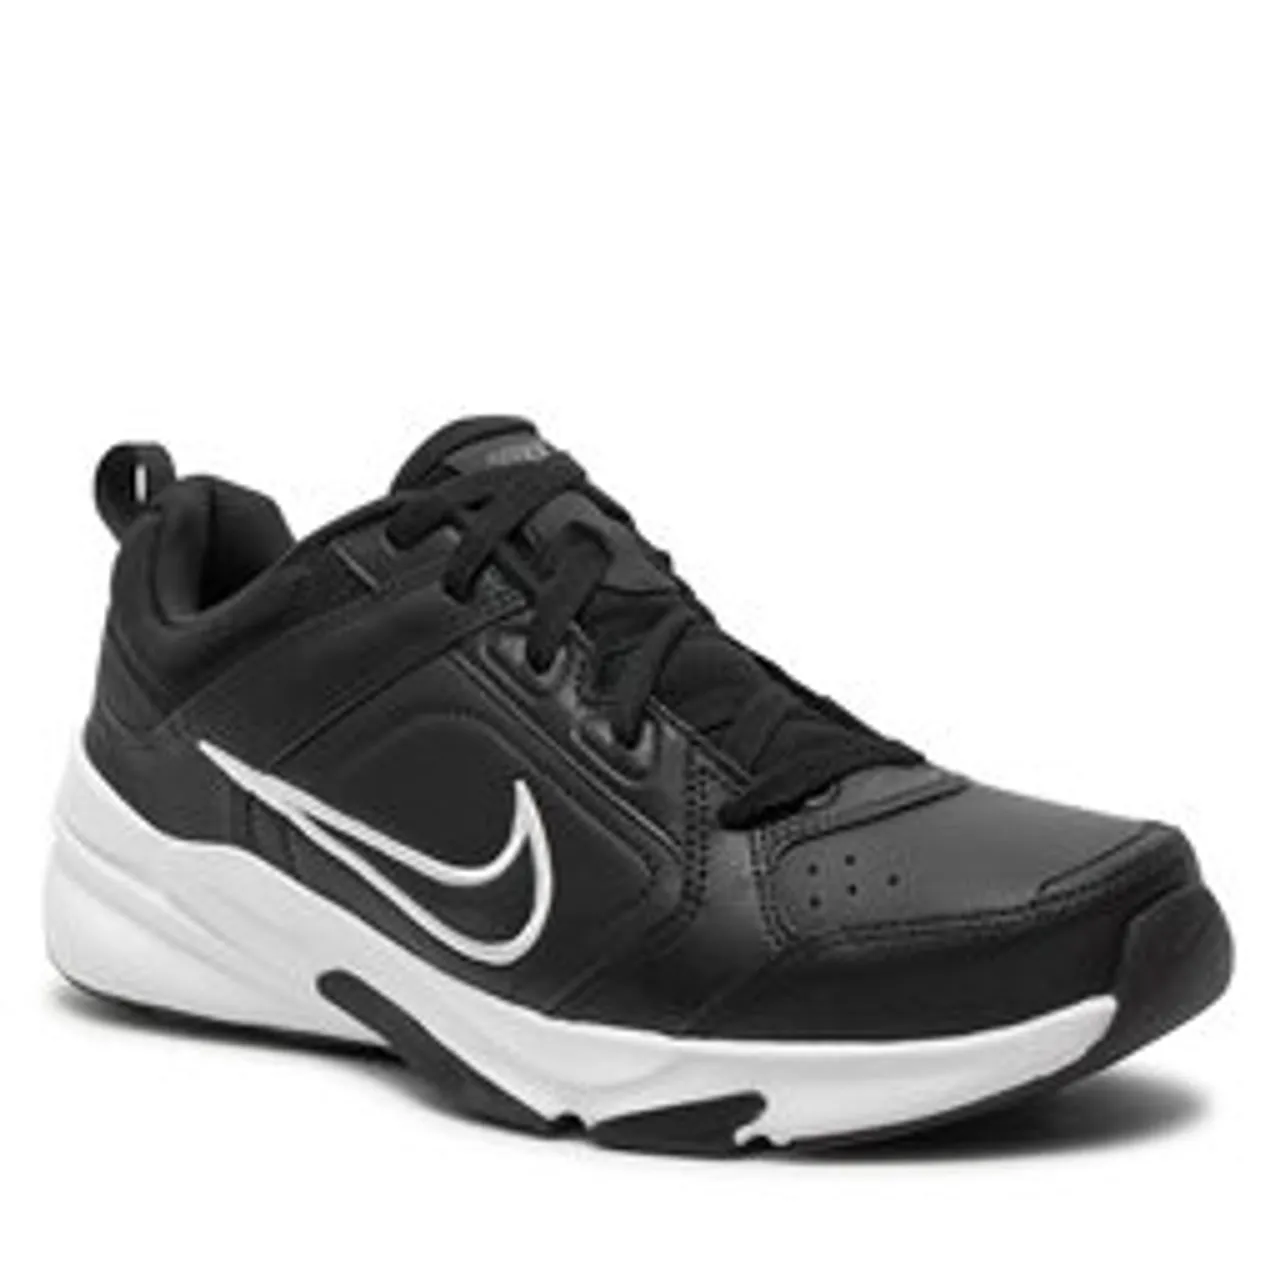 Schuhe Nike Defyallday DJ1196 002 Schwarz